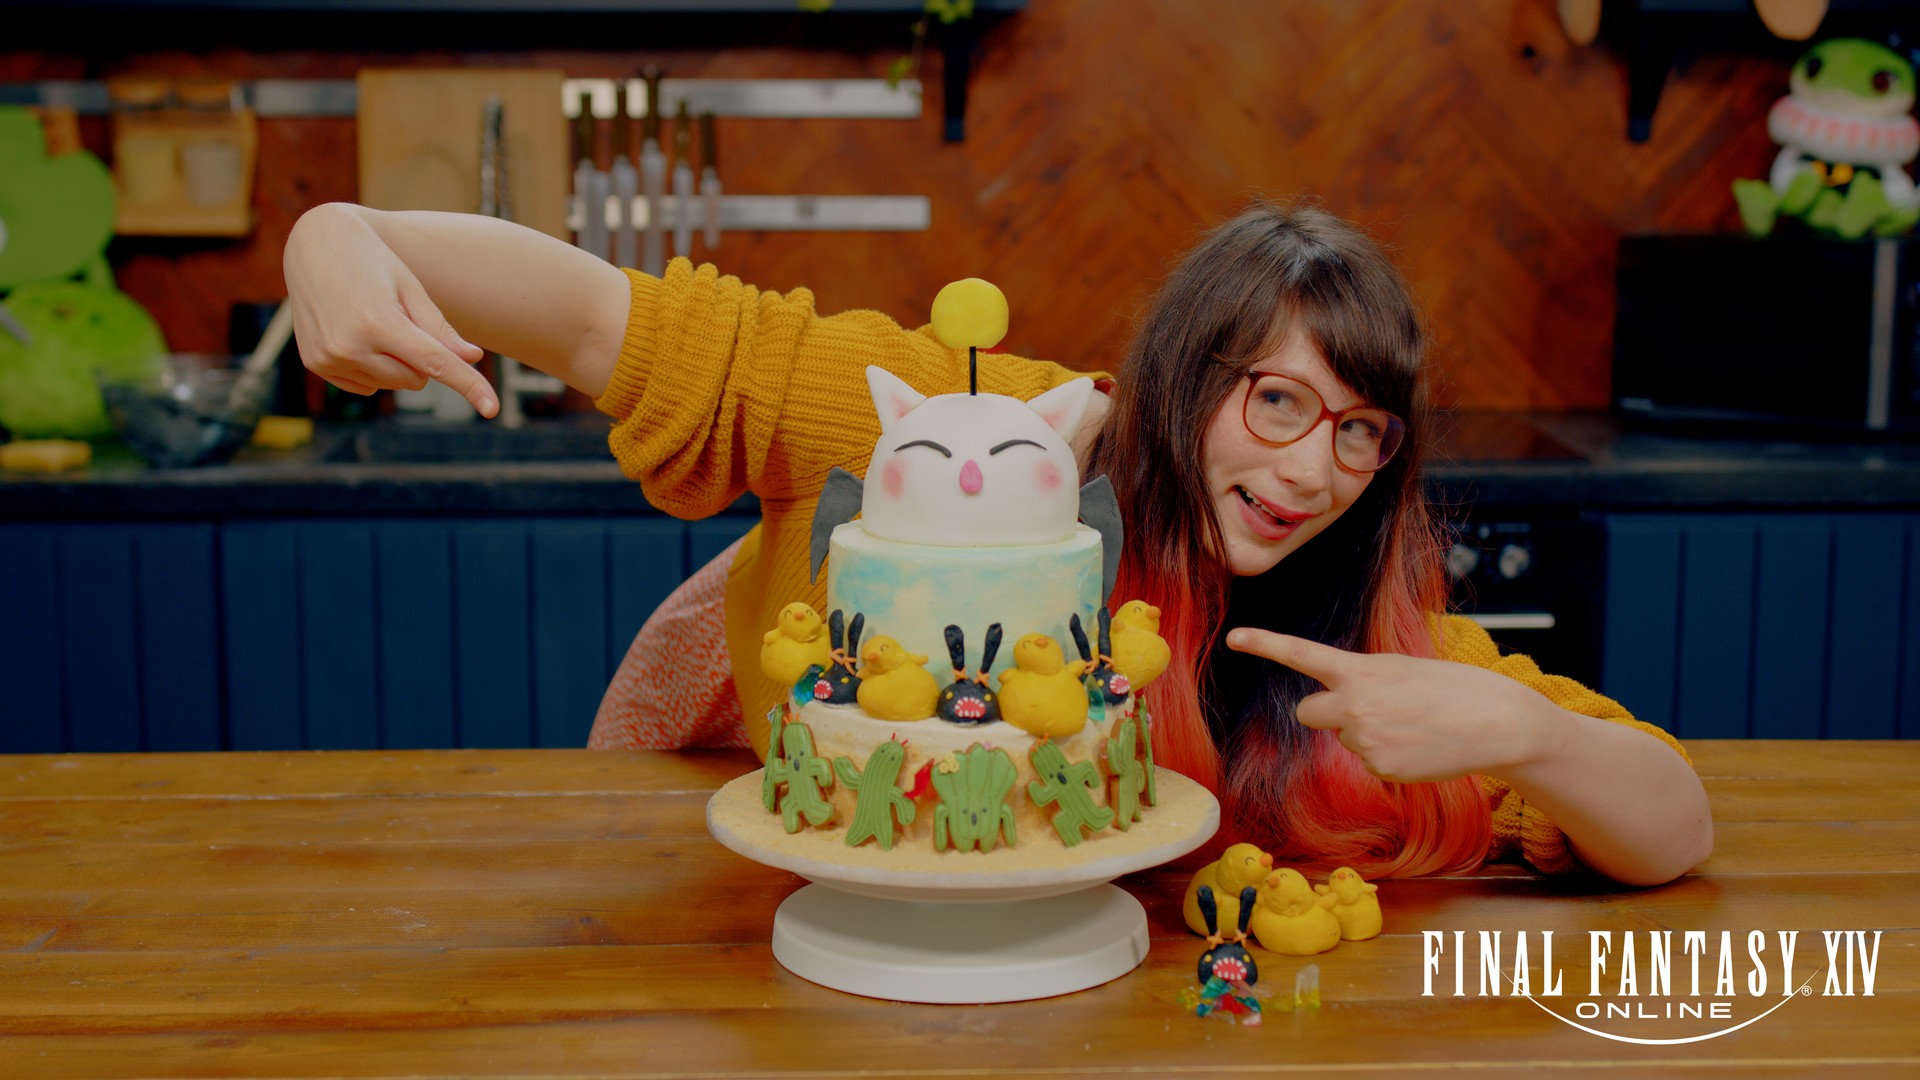 Final Fantasy XIV Online Celebrates 8th Anniversary With Birthday Cake From Culinarian Supreme Kim-Joy